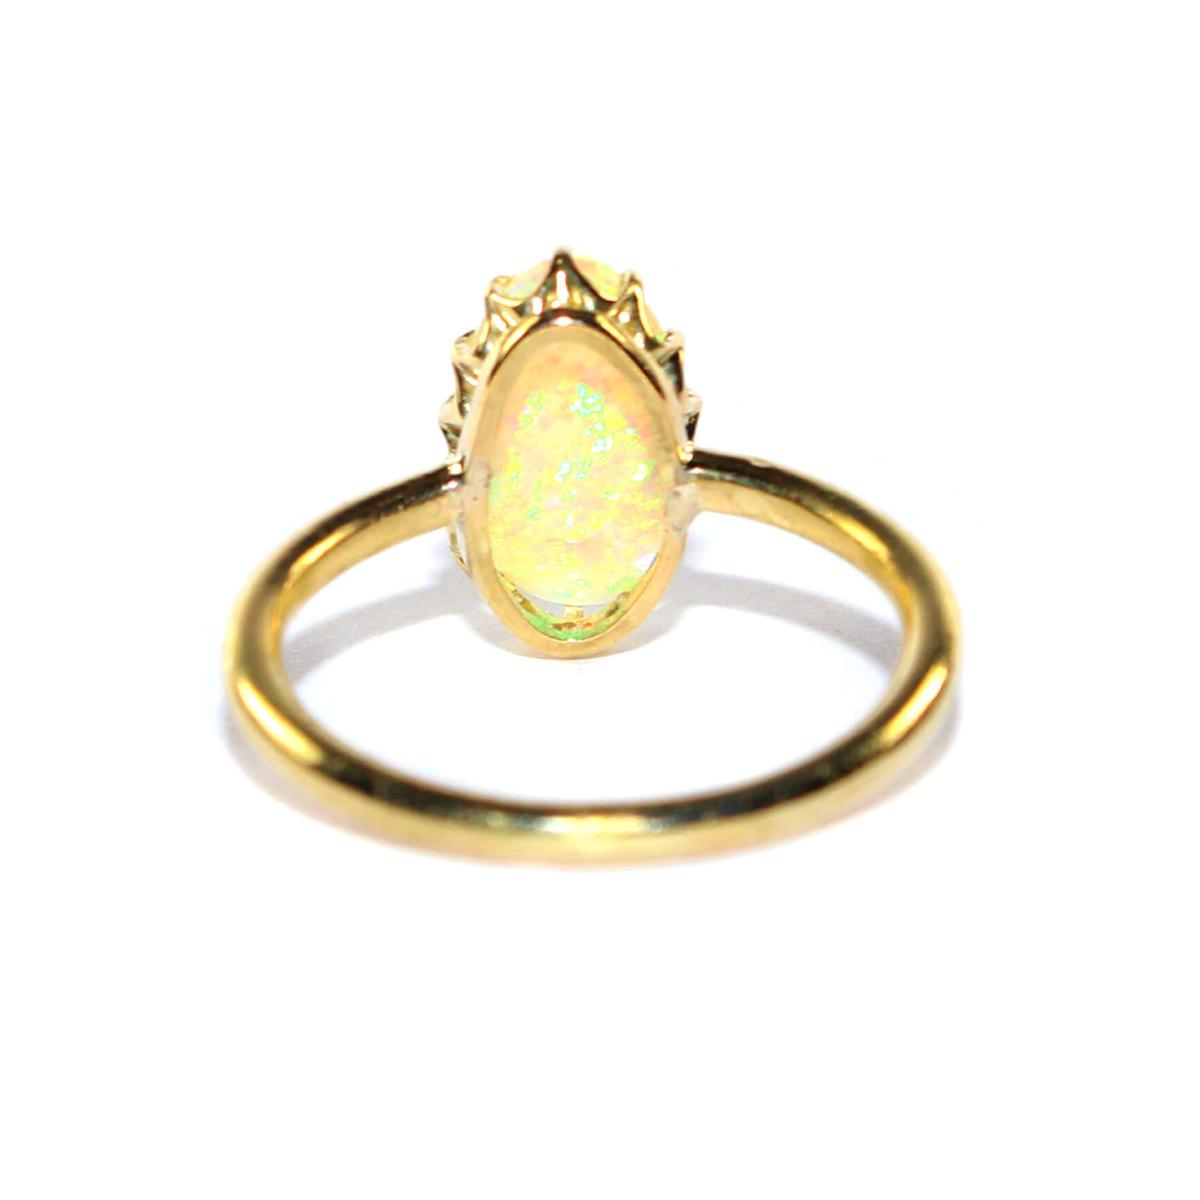 Edwardian Opal Ring circa 1910